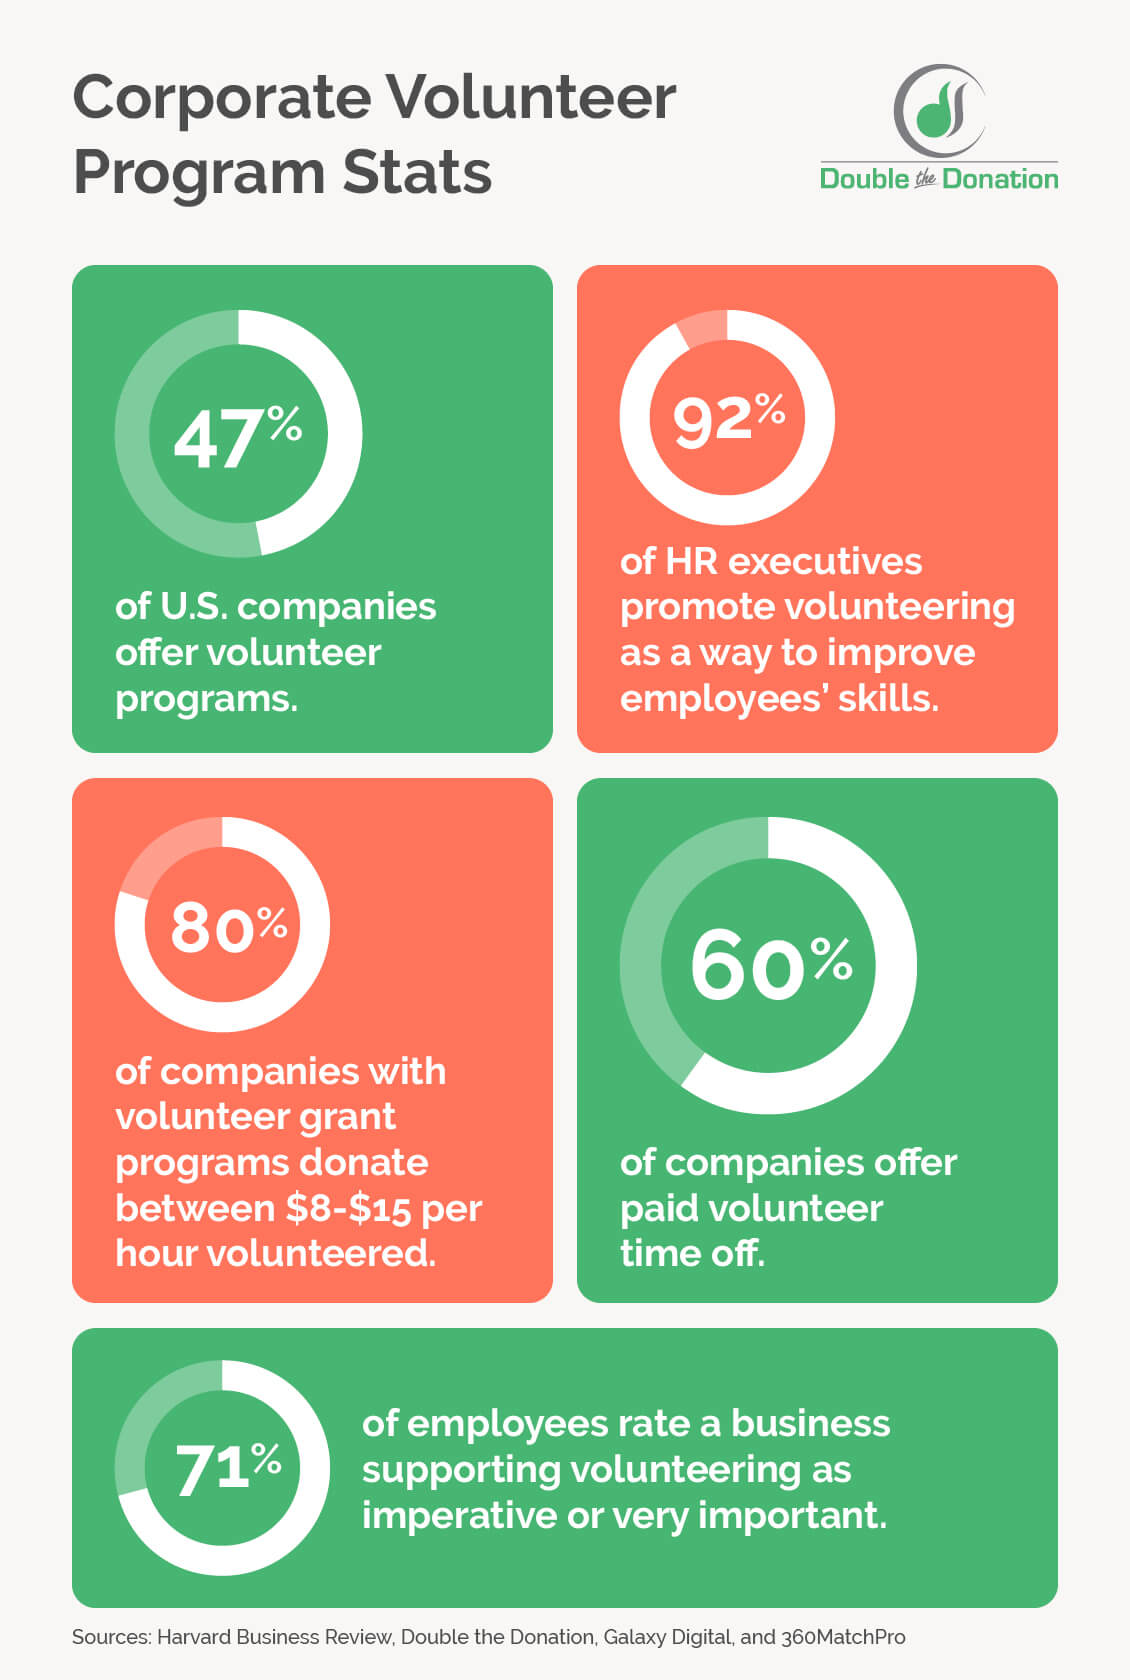 Several volunteer program stats, written out below.